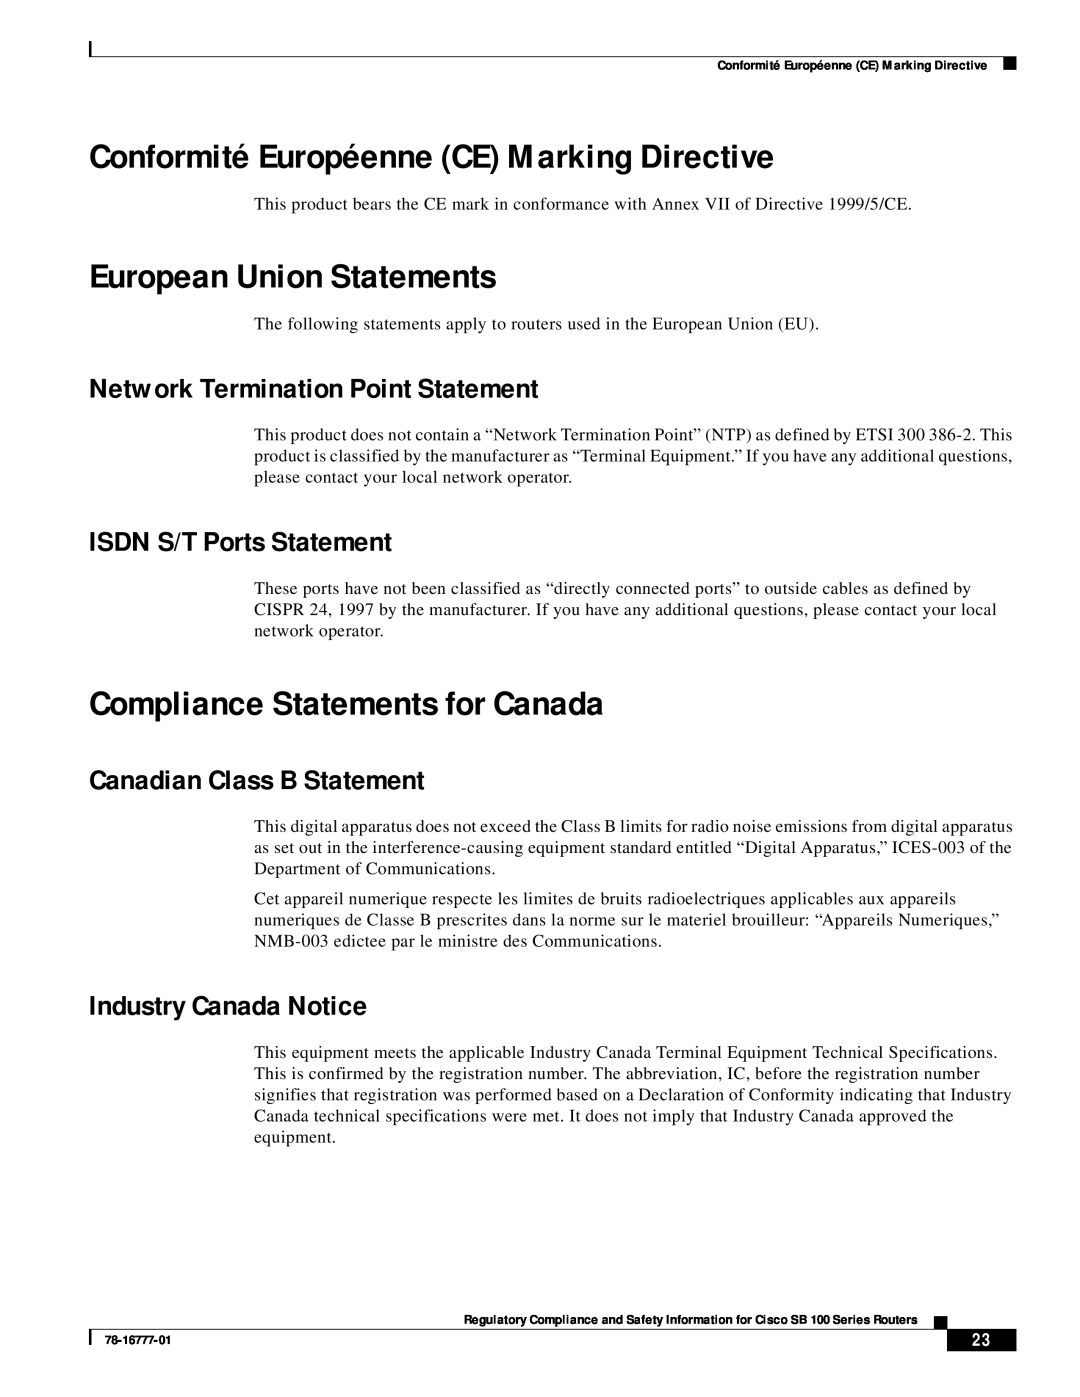 Cisco Systems SB 100 Series Conformité Européenne CE Marking Directive, European Union Statements, Industry Canada Notice 